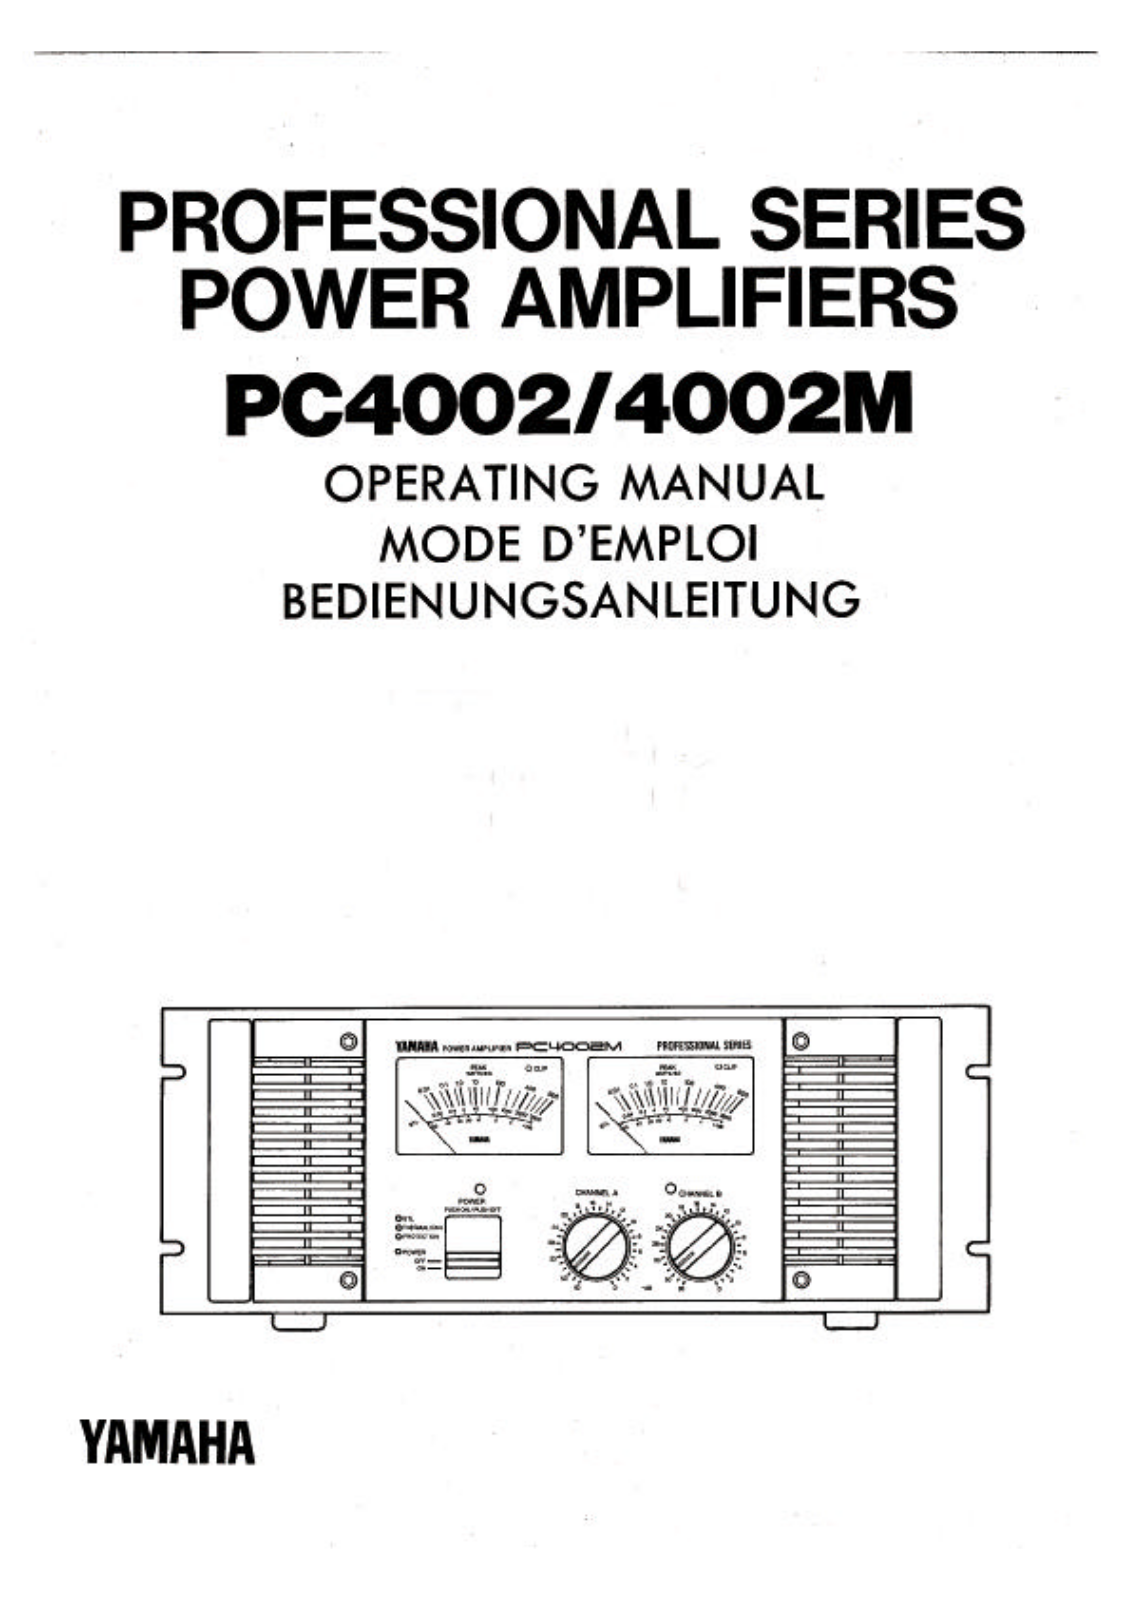 Yamaha 4002M Operating Manual